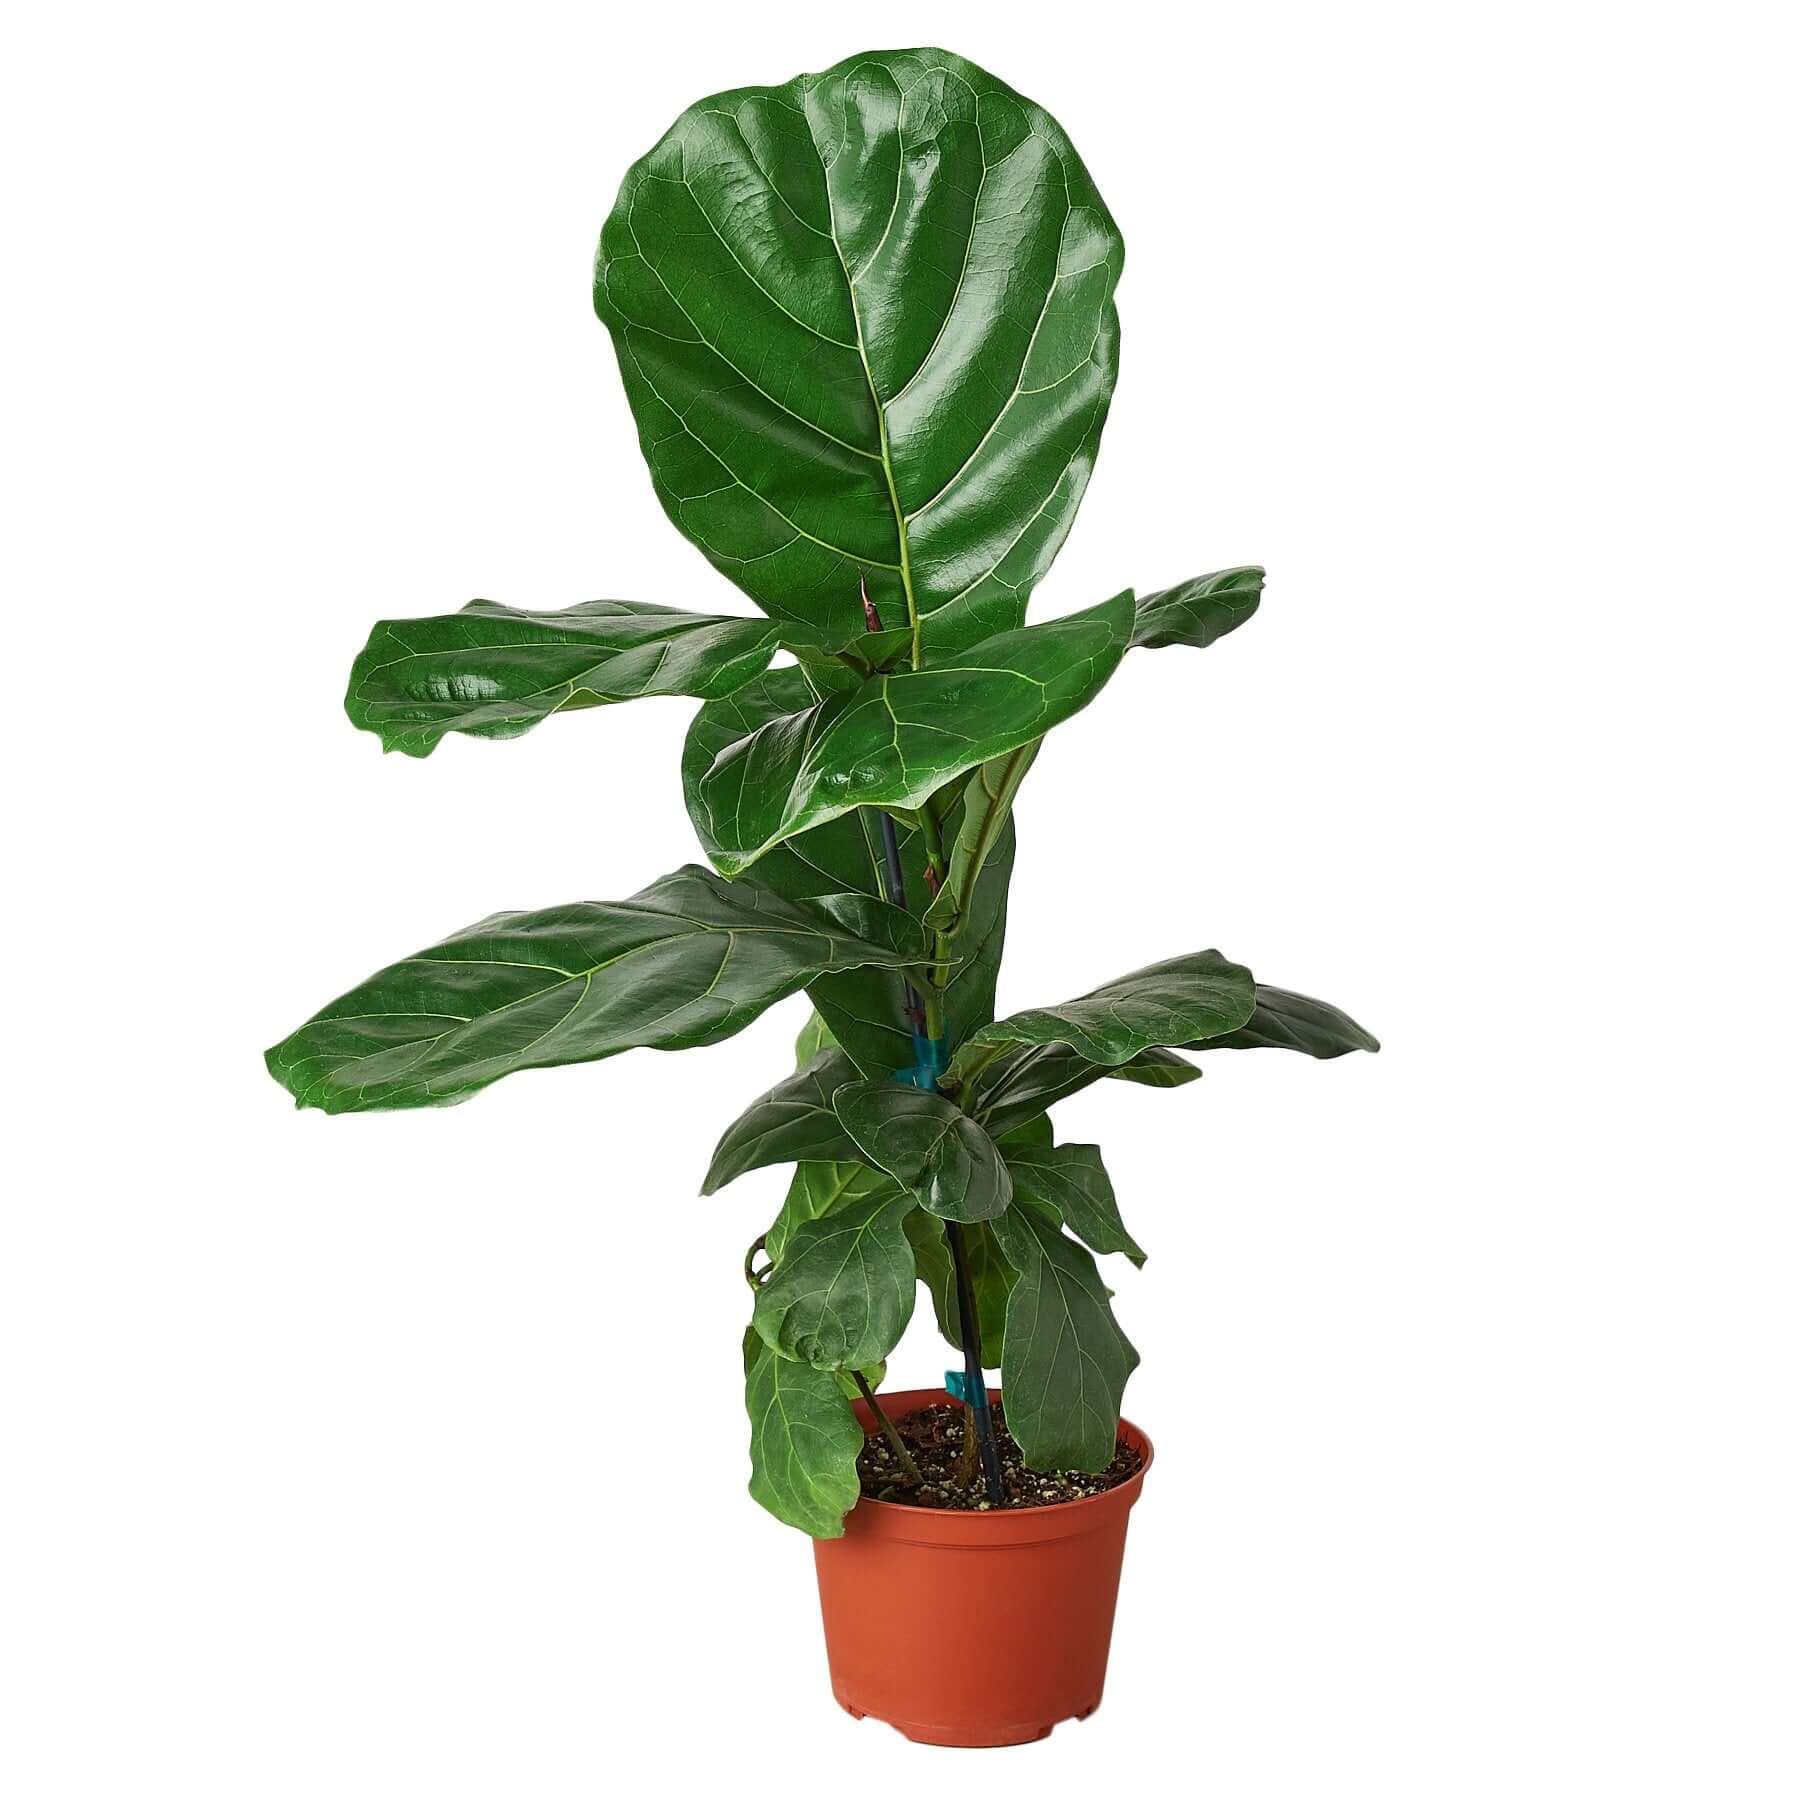 Ficus Lyrata - Fiddle Leaf Fig | Modern house plants that clean the air